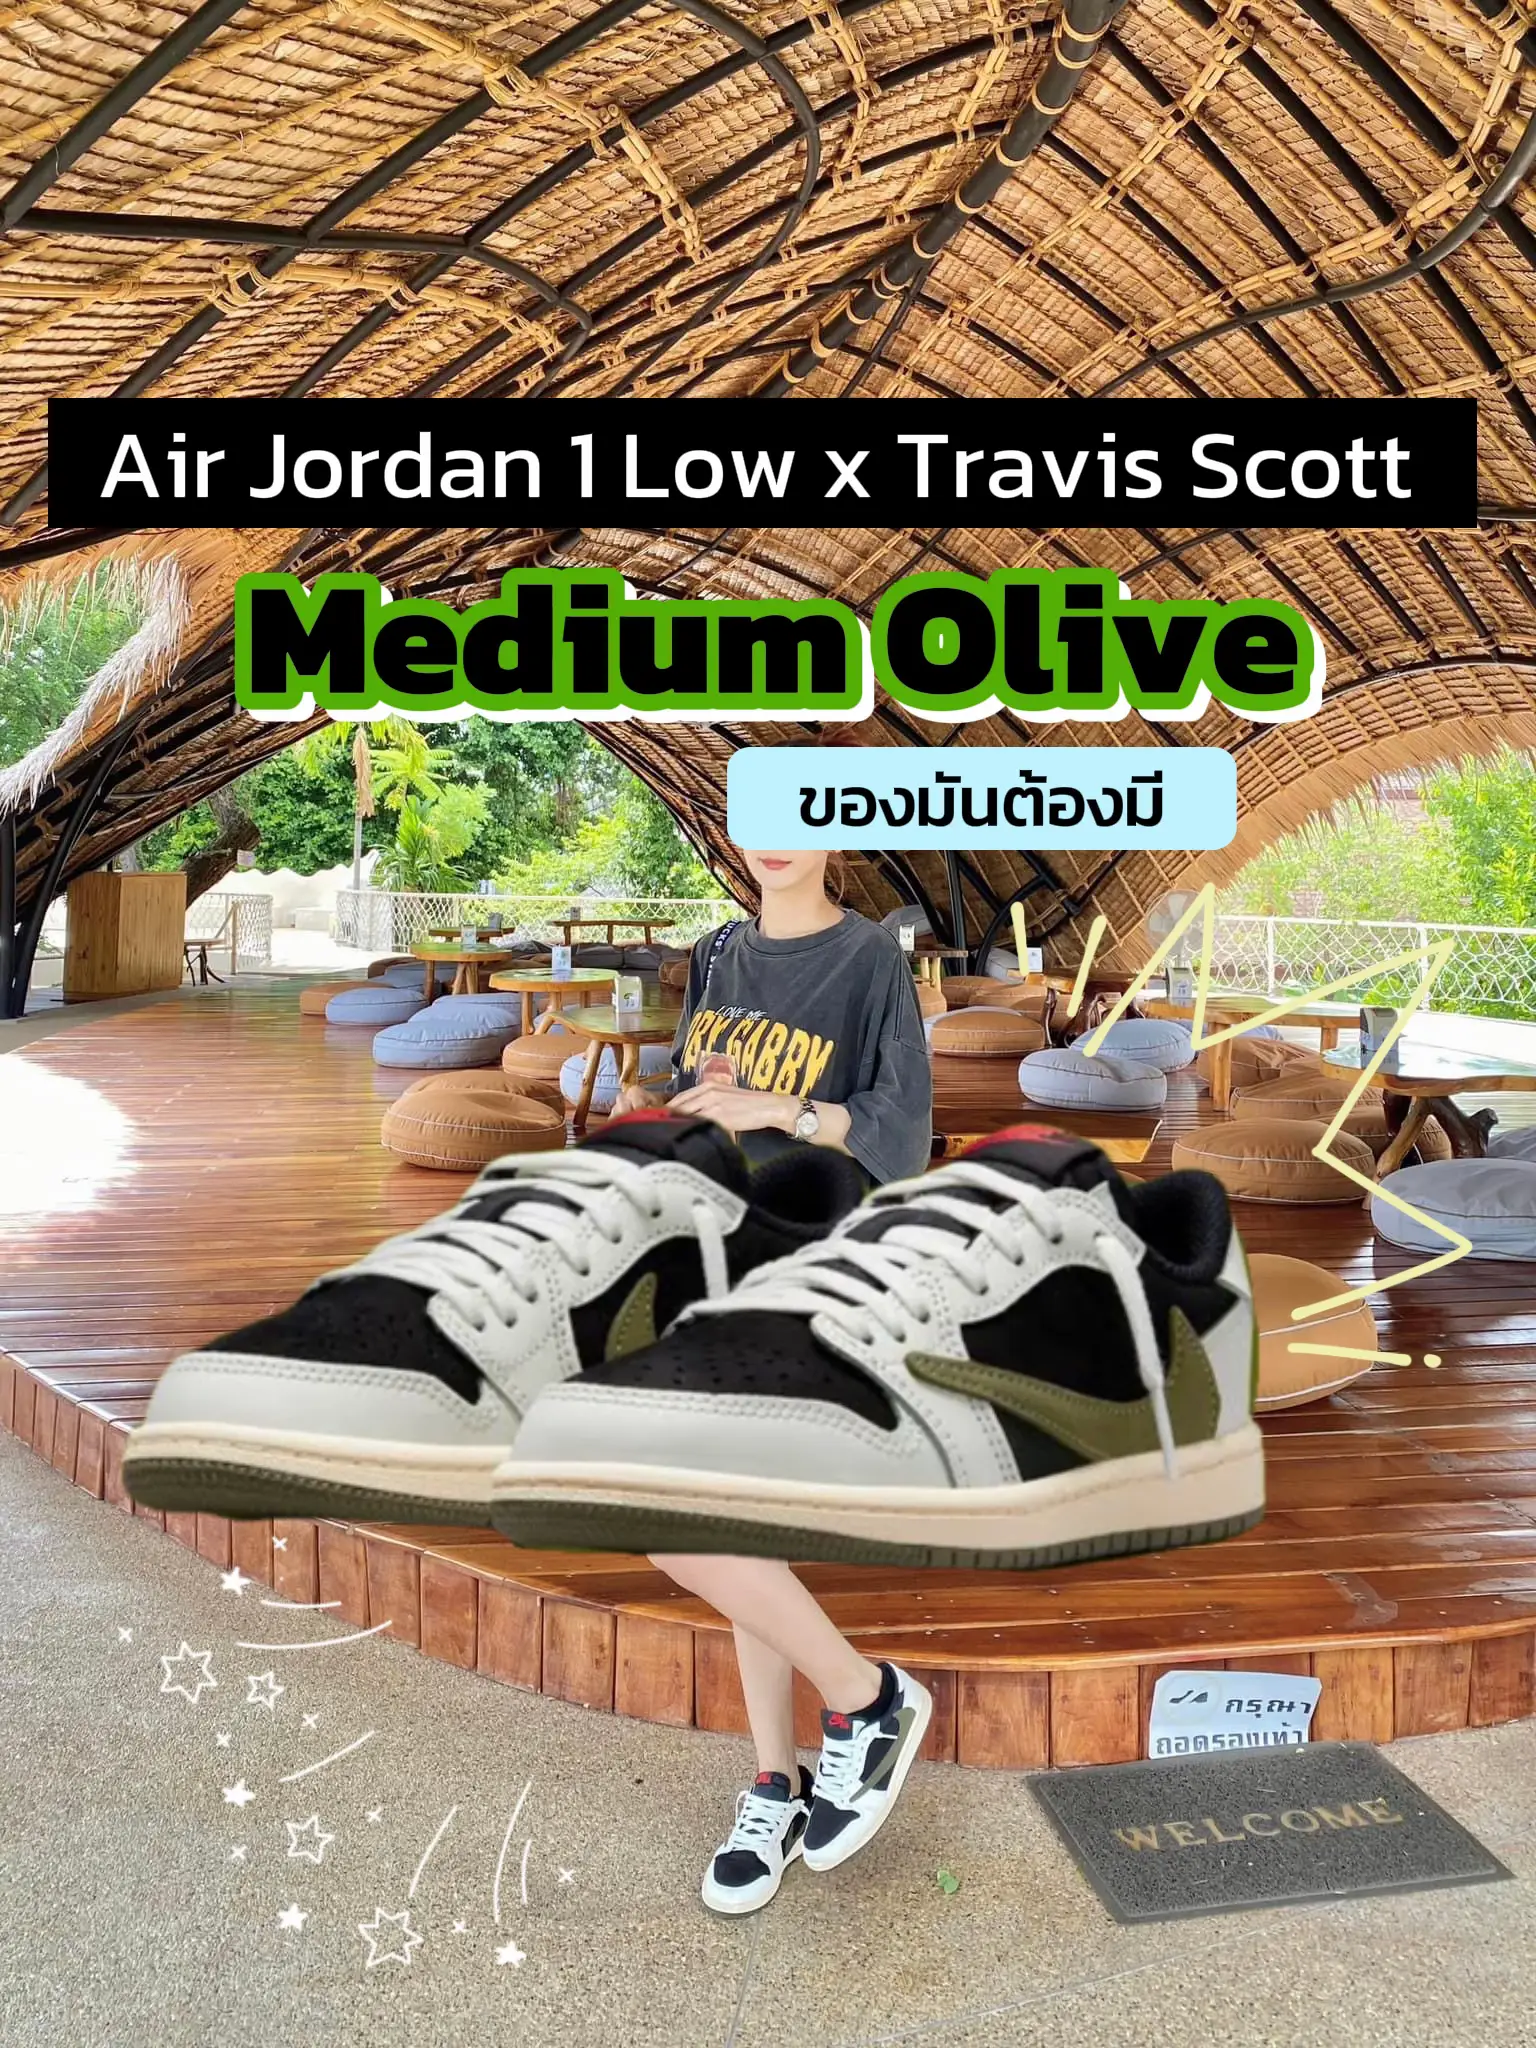 Air Jordan 1 Low x Travis Scott Medium Olive | Gallery posted by